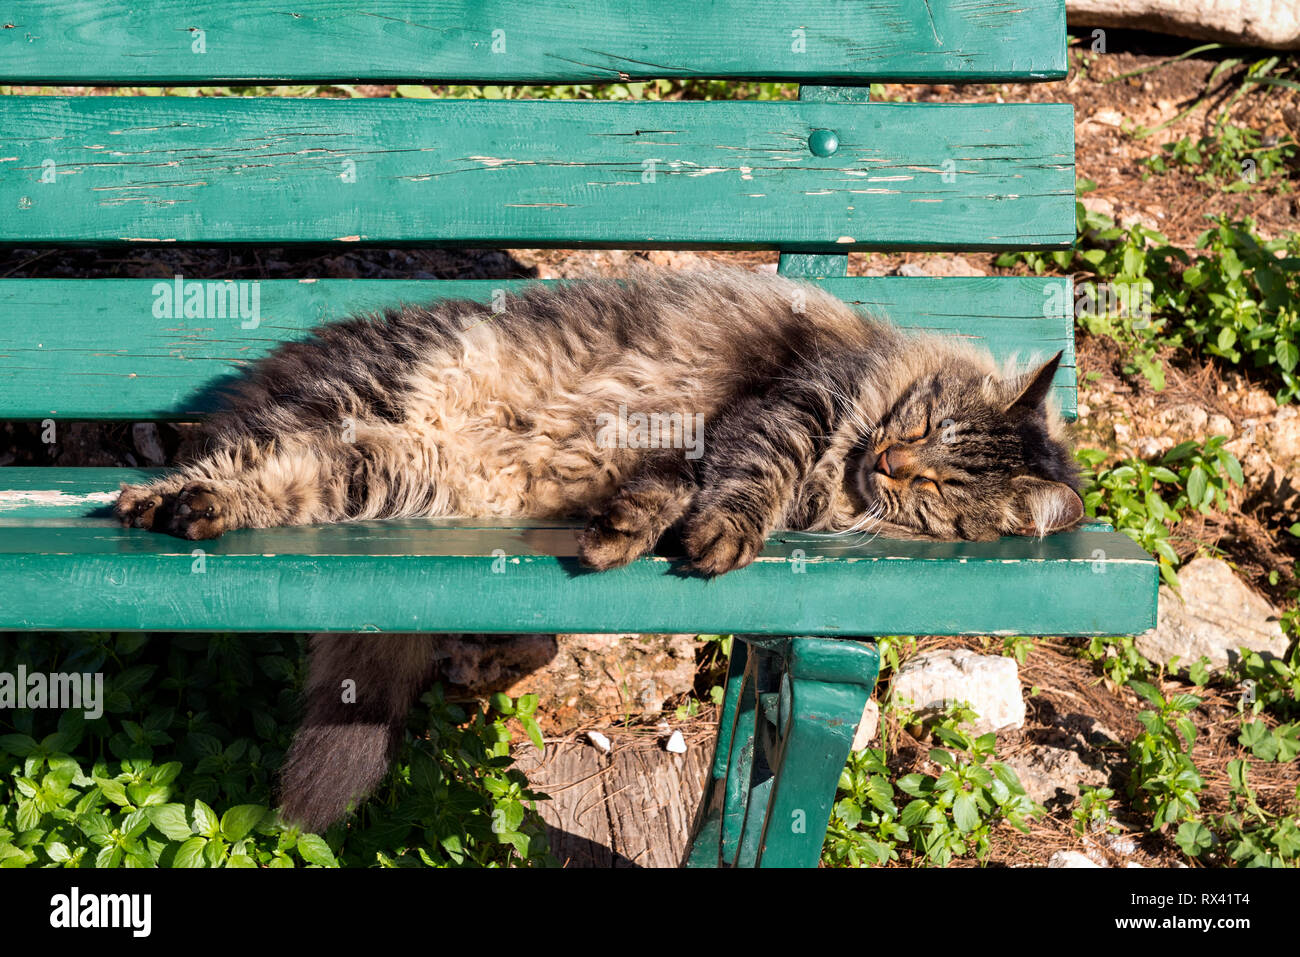 Cute cat sleeping on a bench Stock Photo